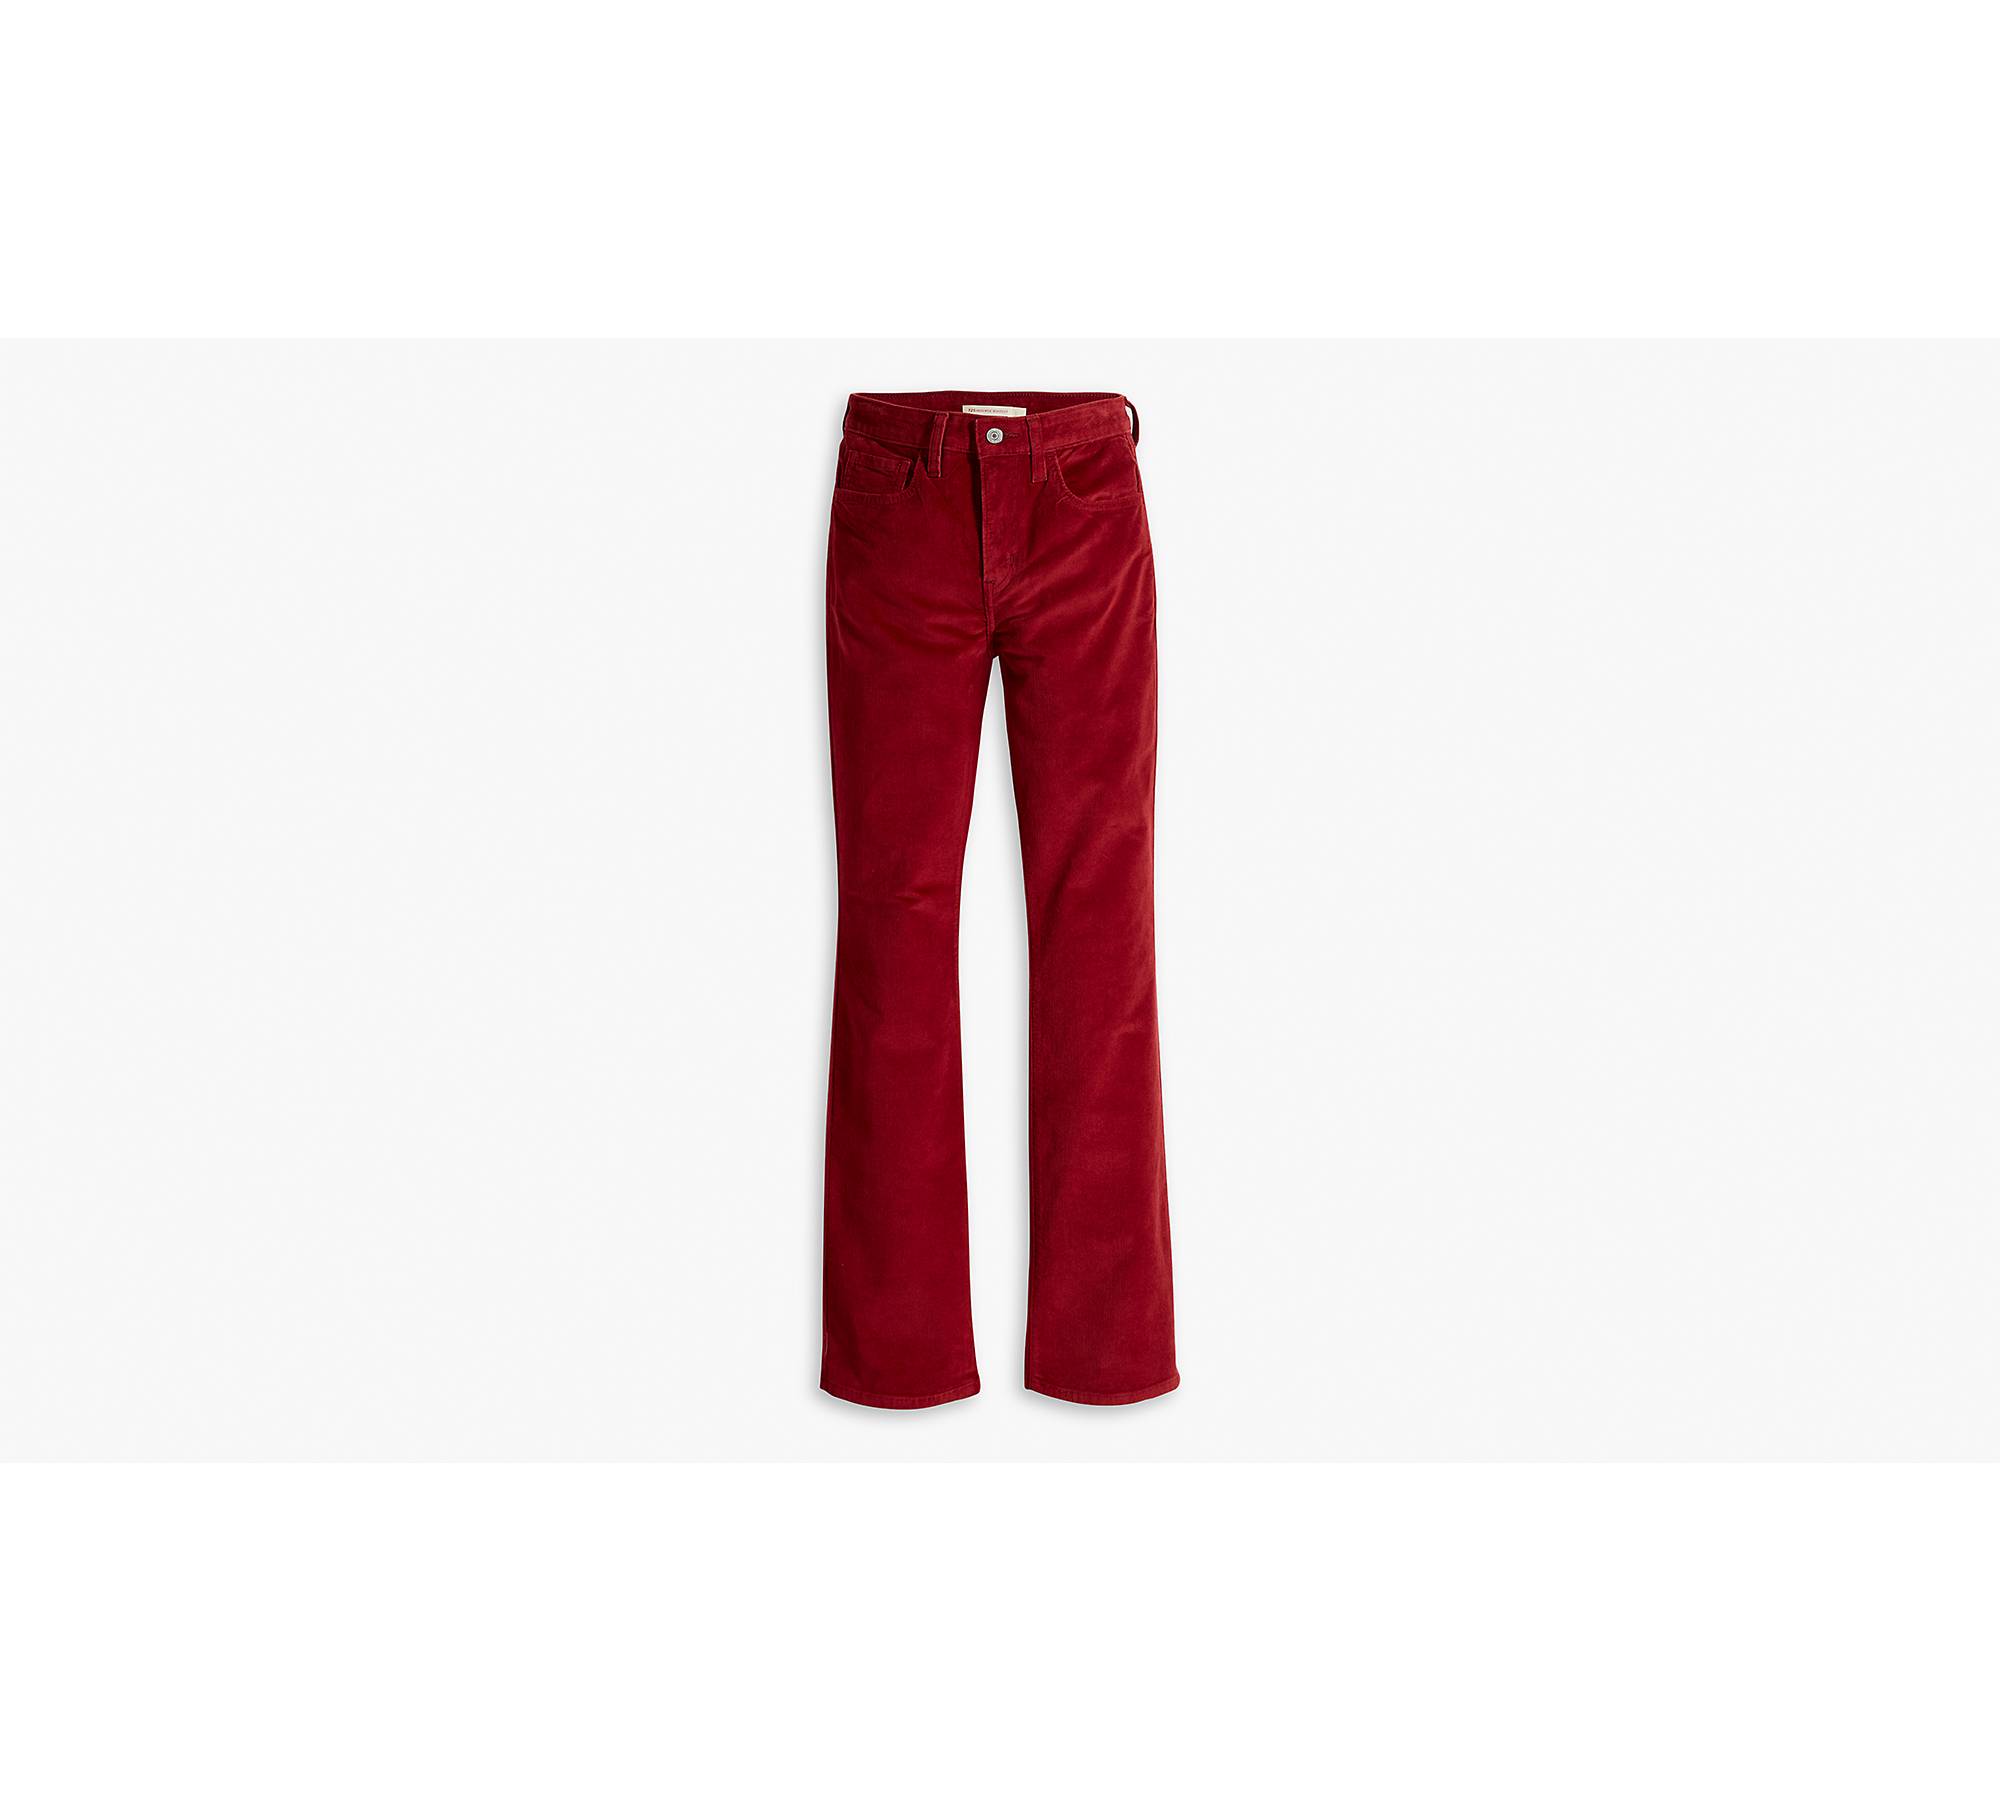 725 High Rise Bootcut Corduroy Women's Pants - Red